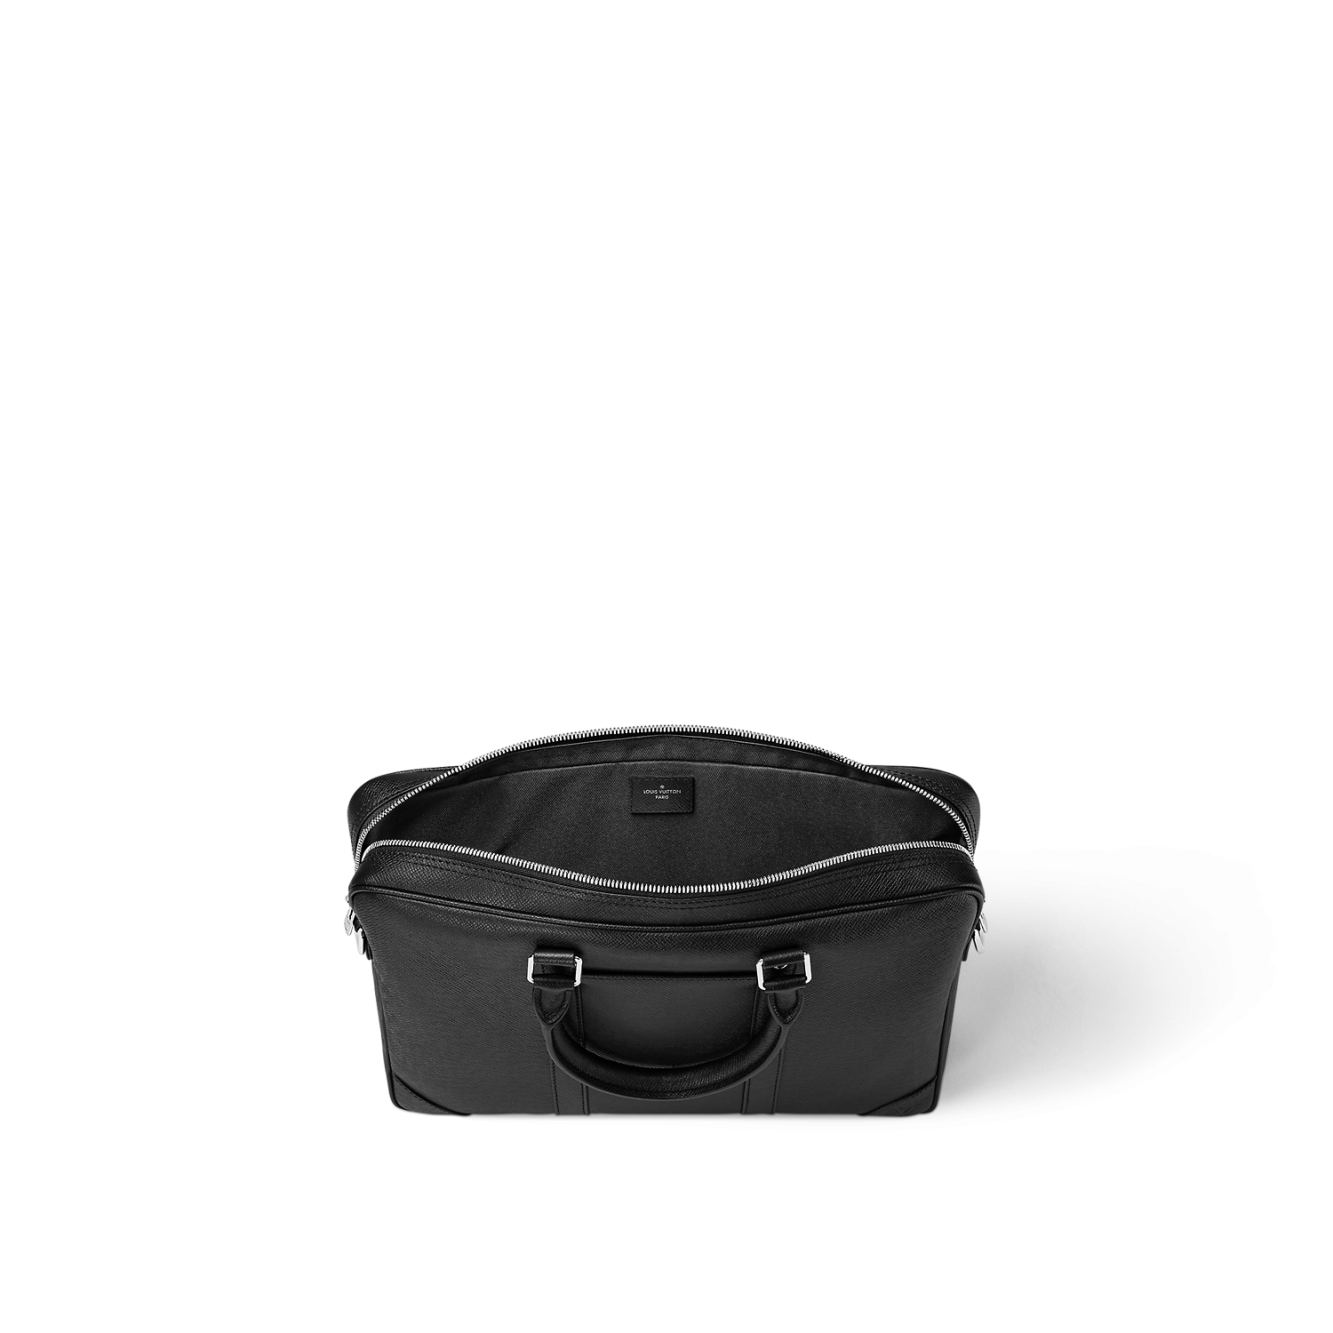 Shop Louis Vuitton Business & Briefcases (M30925) by